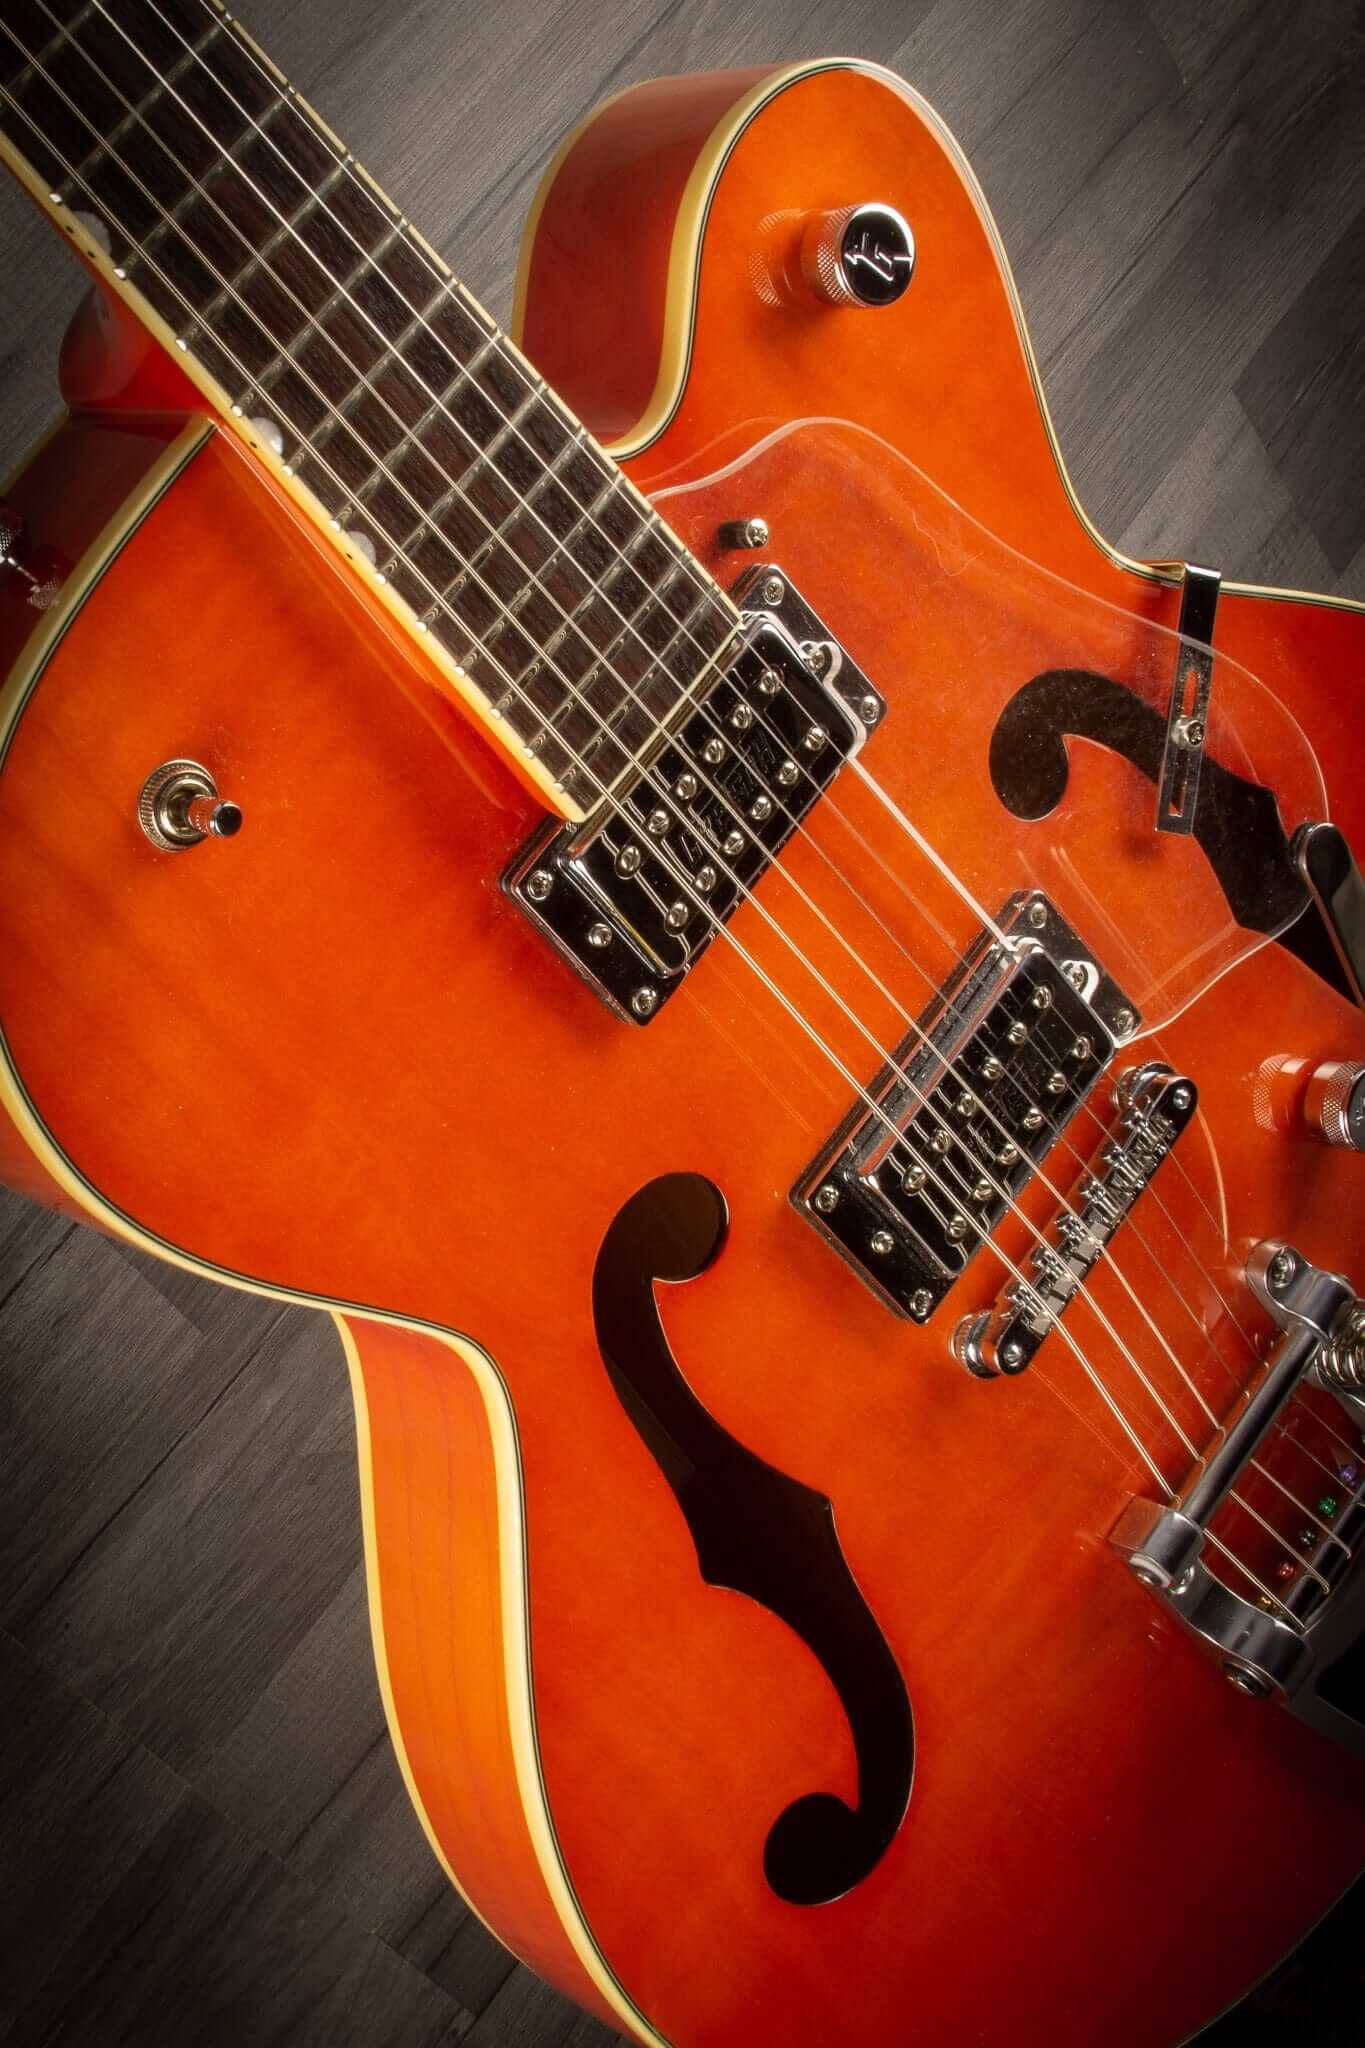 Gretsch Electric Guitar USED - Gretsch G5120 Orange (Korean)